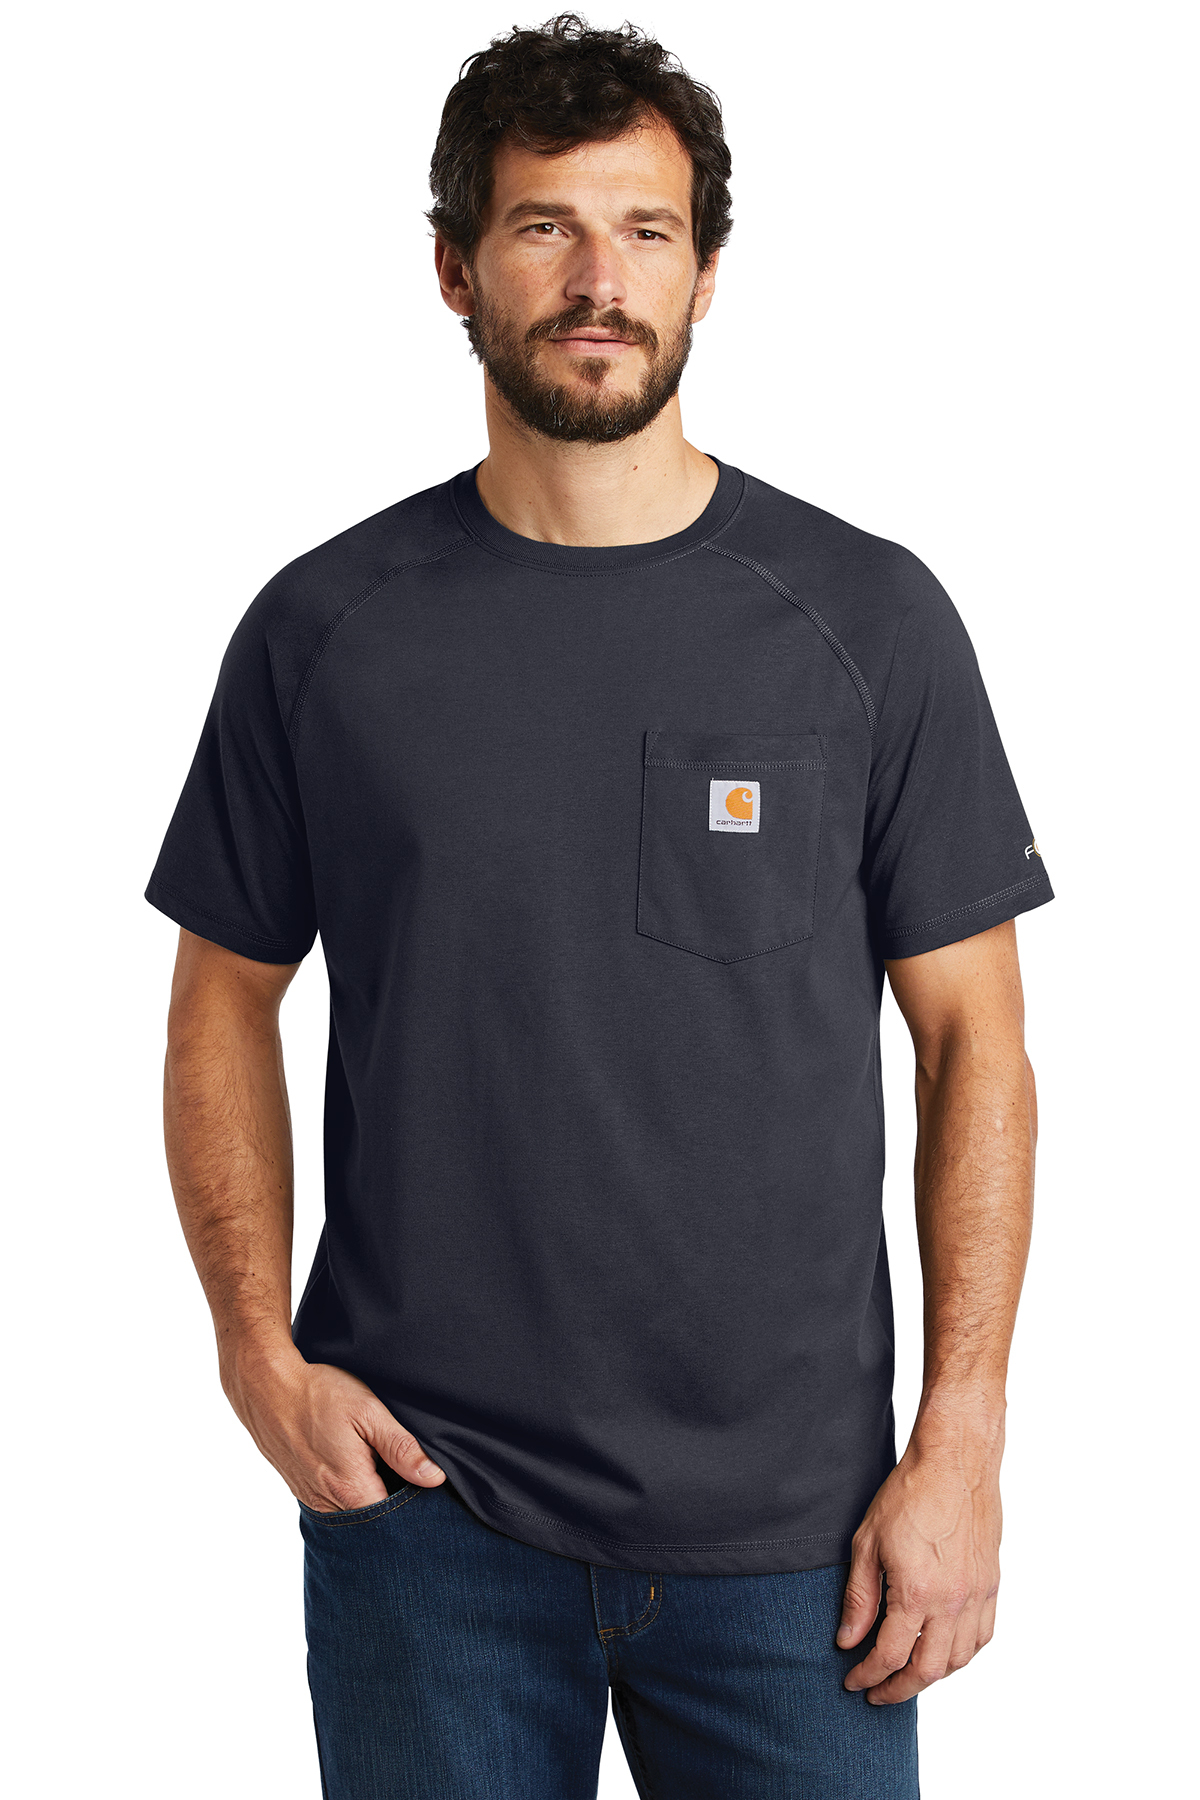 CT100410   Carhartt Force ® Cotton Delmont Short Sleeve T-Shirt 